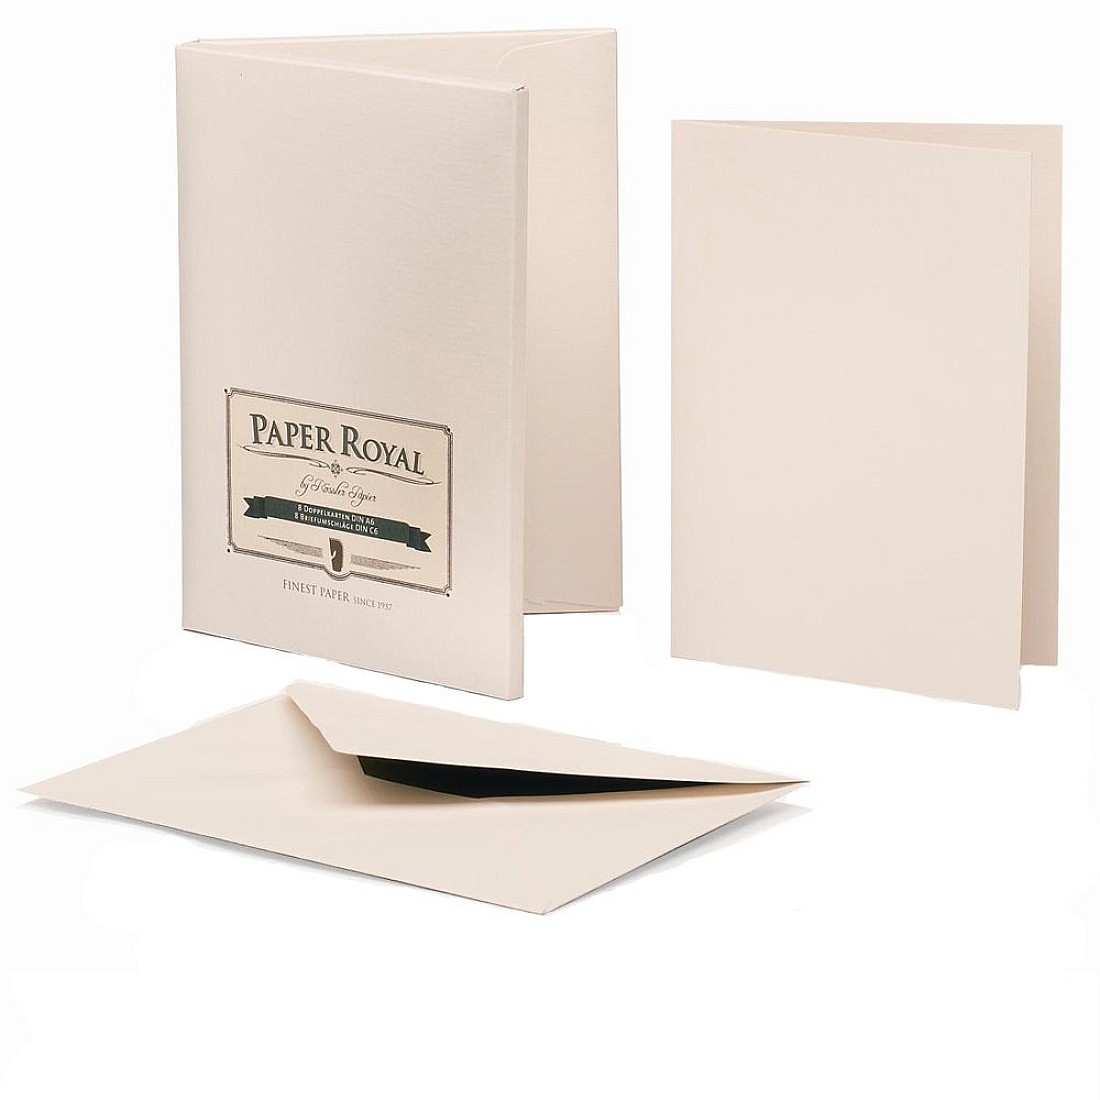 Rössler Papier Paper Royal Chamois A6 Double Card per 20 Sheets